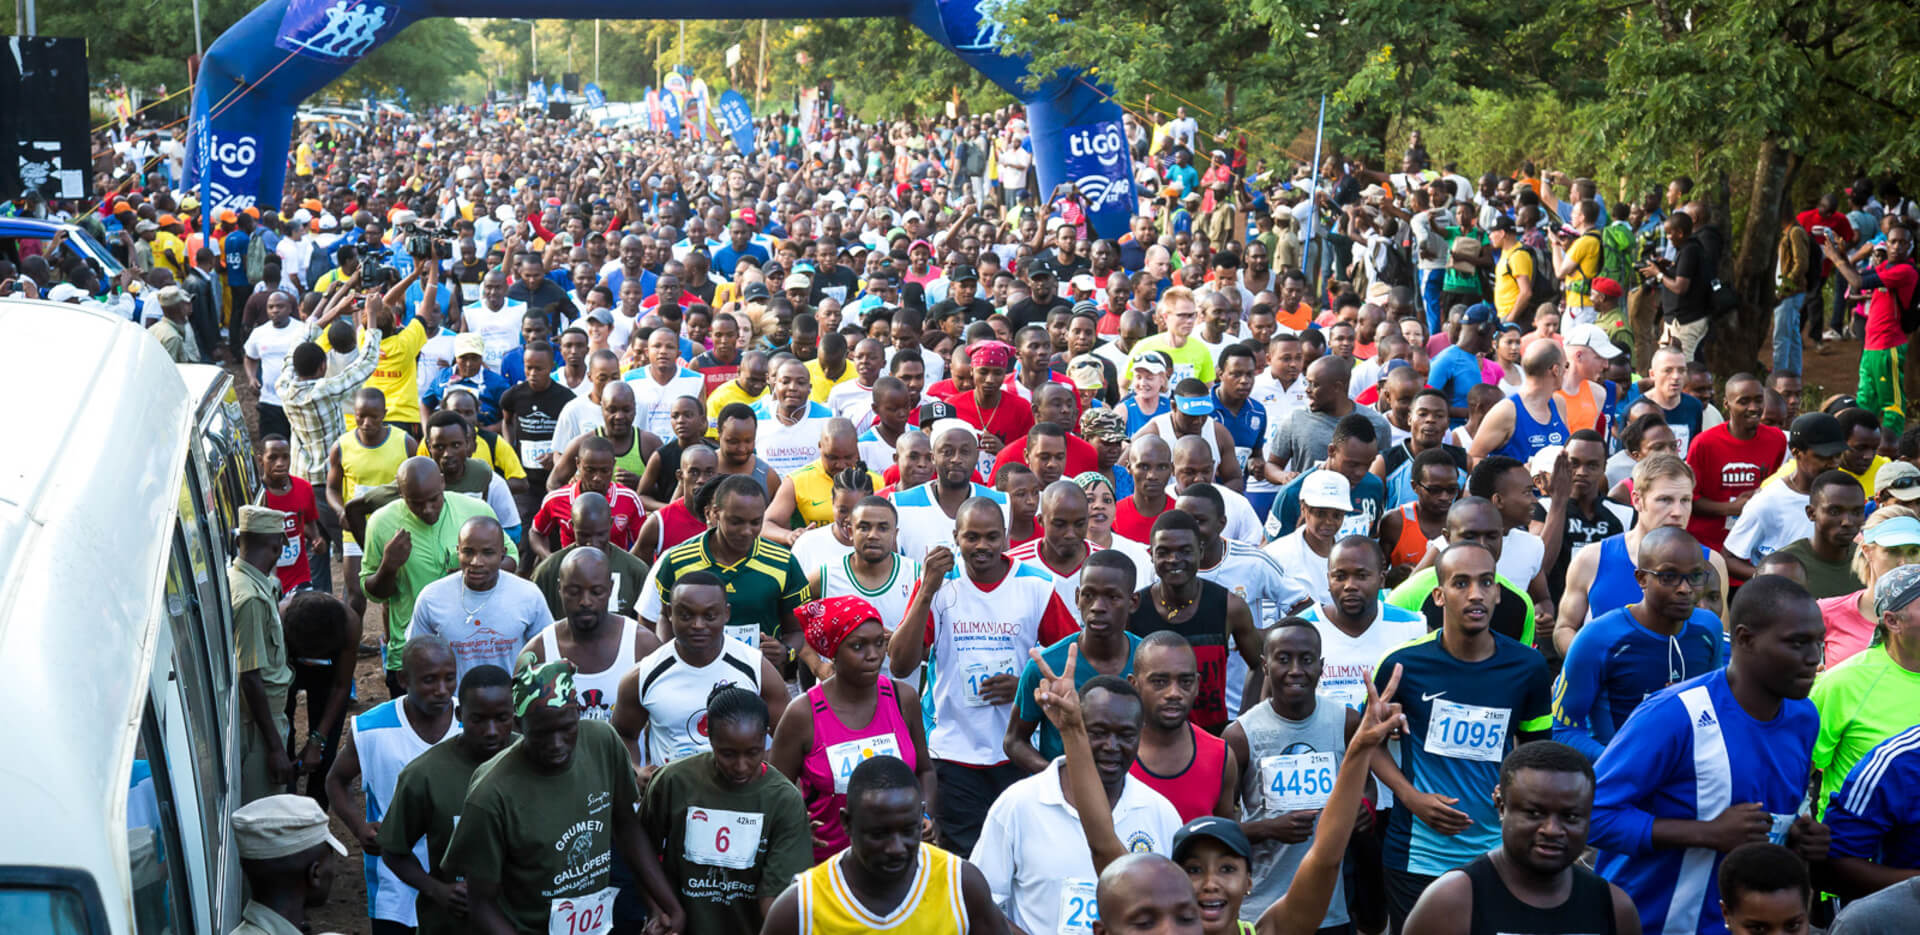 Kilimanjaro Marathon Africa Marathons Official Travel Partner